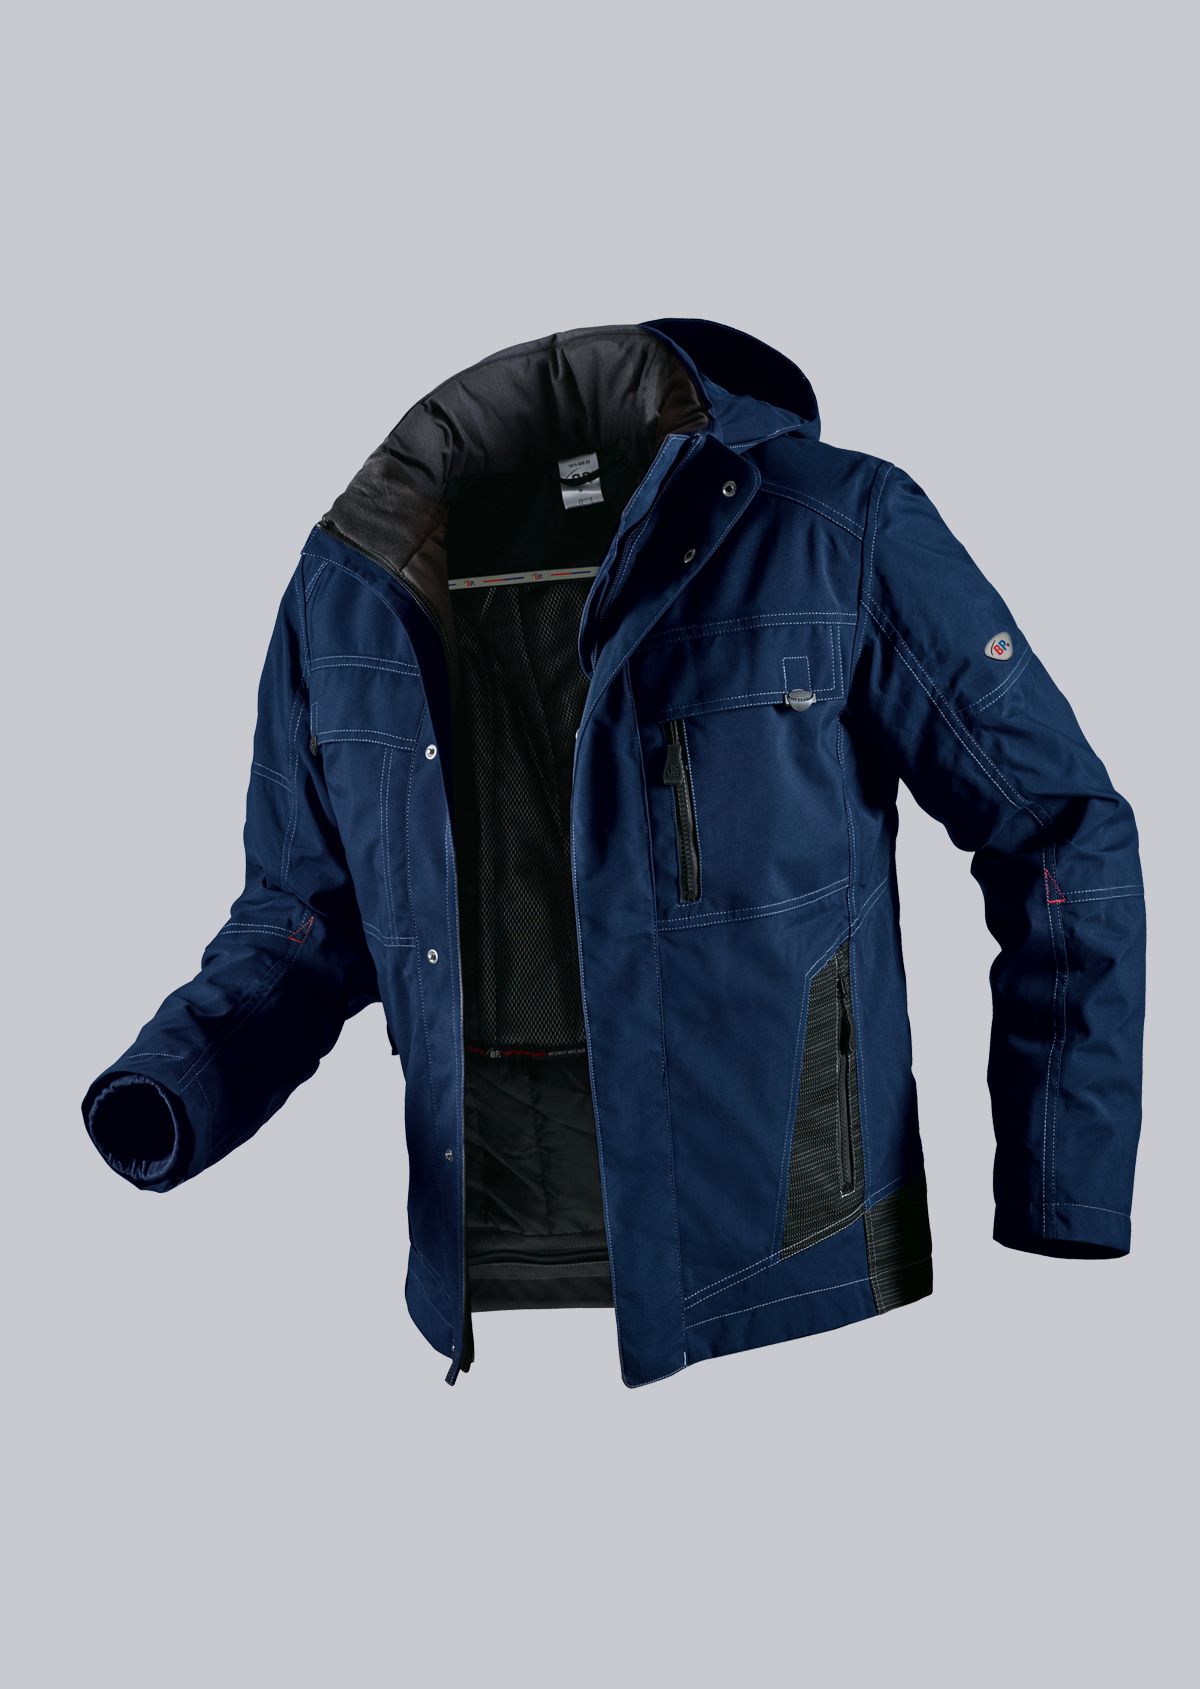 BP® Weatherproof winter jacket